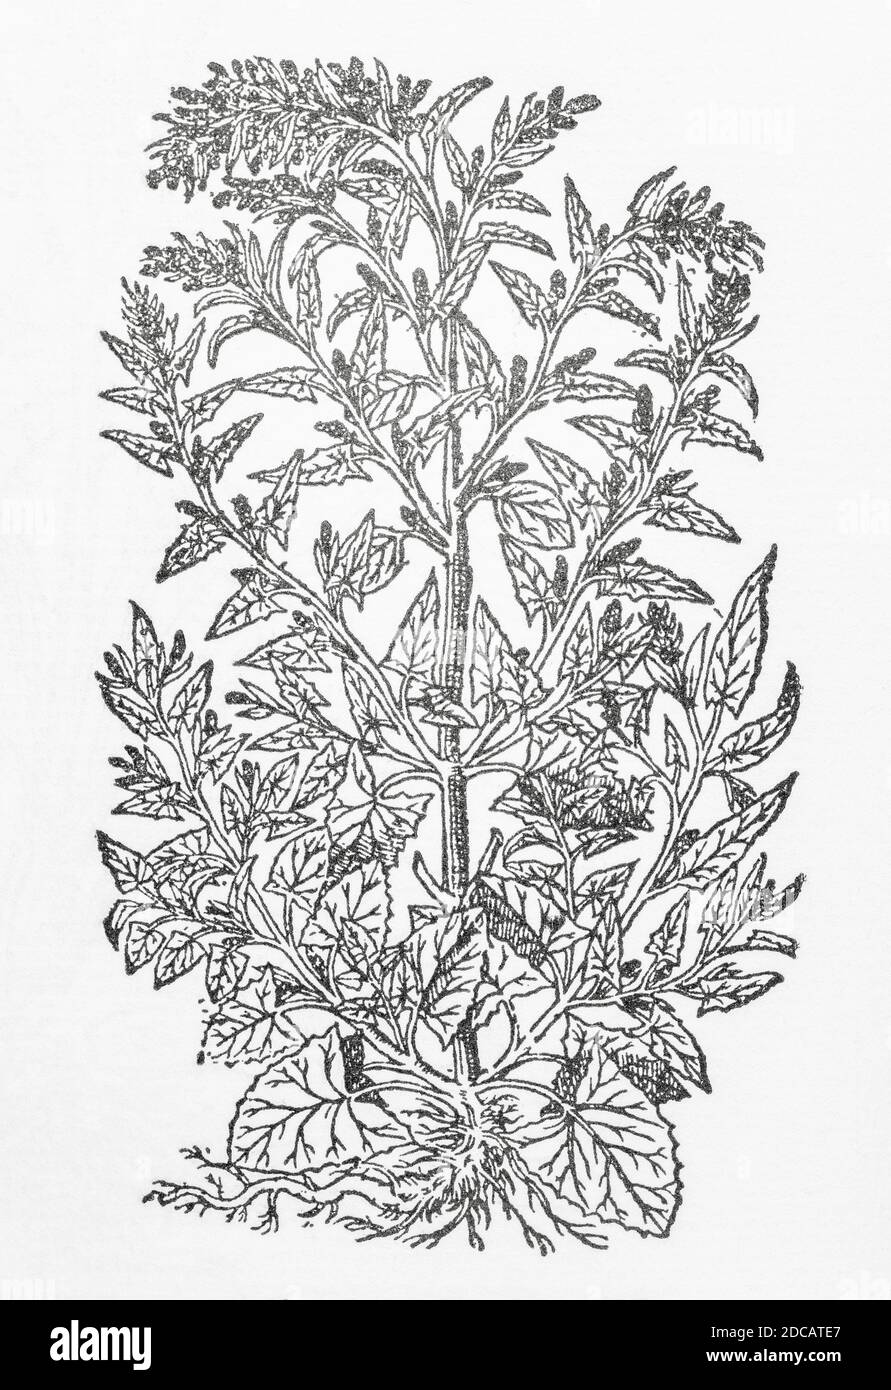 Garden Orache / Atriplex hortensis woodcut from Gerarde's Herball, History of Plants. Refers as 'White Orach' / Atriplex sativa alba. P256 Stock Photo